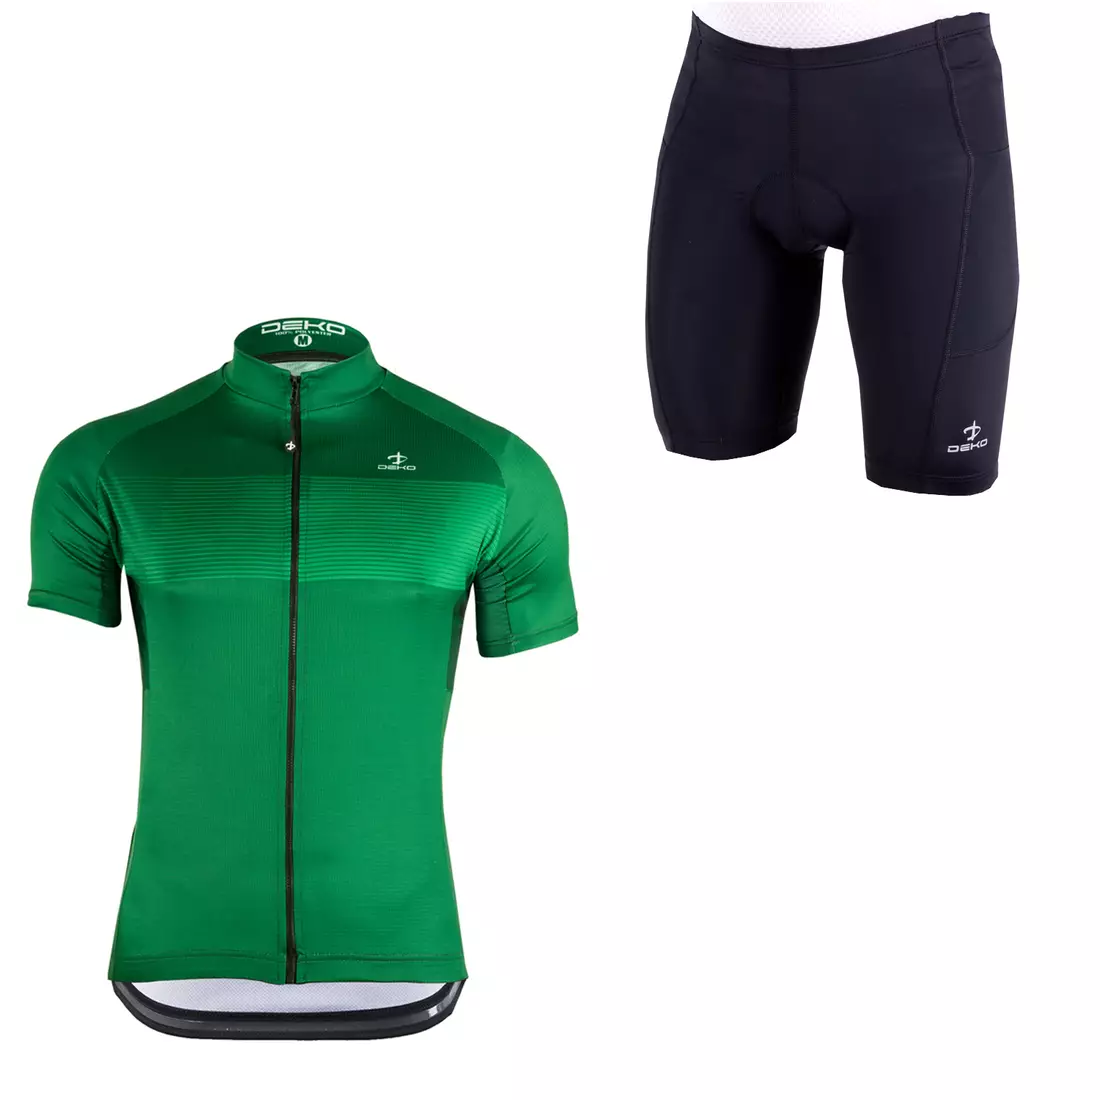 [Set] DEKO STYLE-0421 Men bike t-shirt, green + DEKO POCKET men's cycling shorts, black